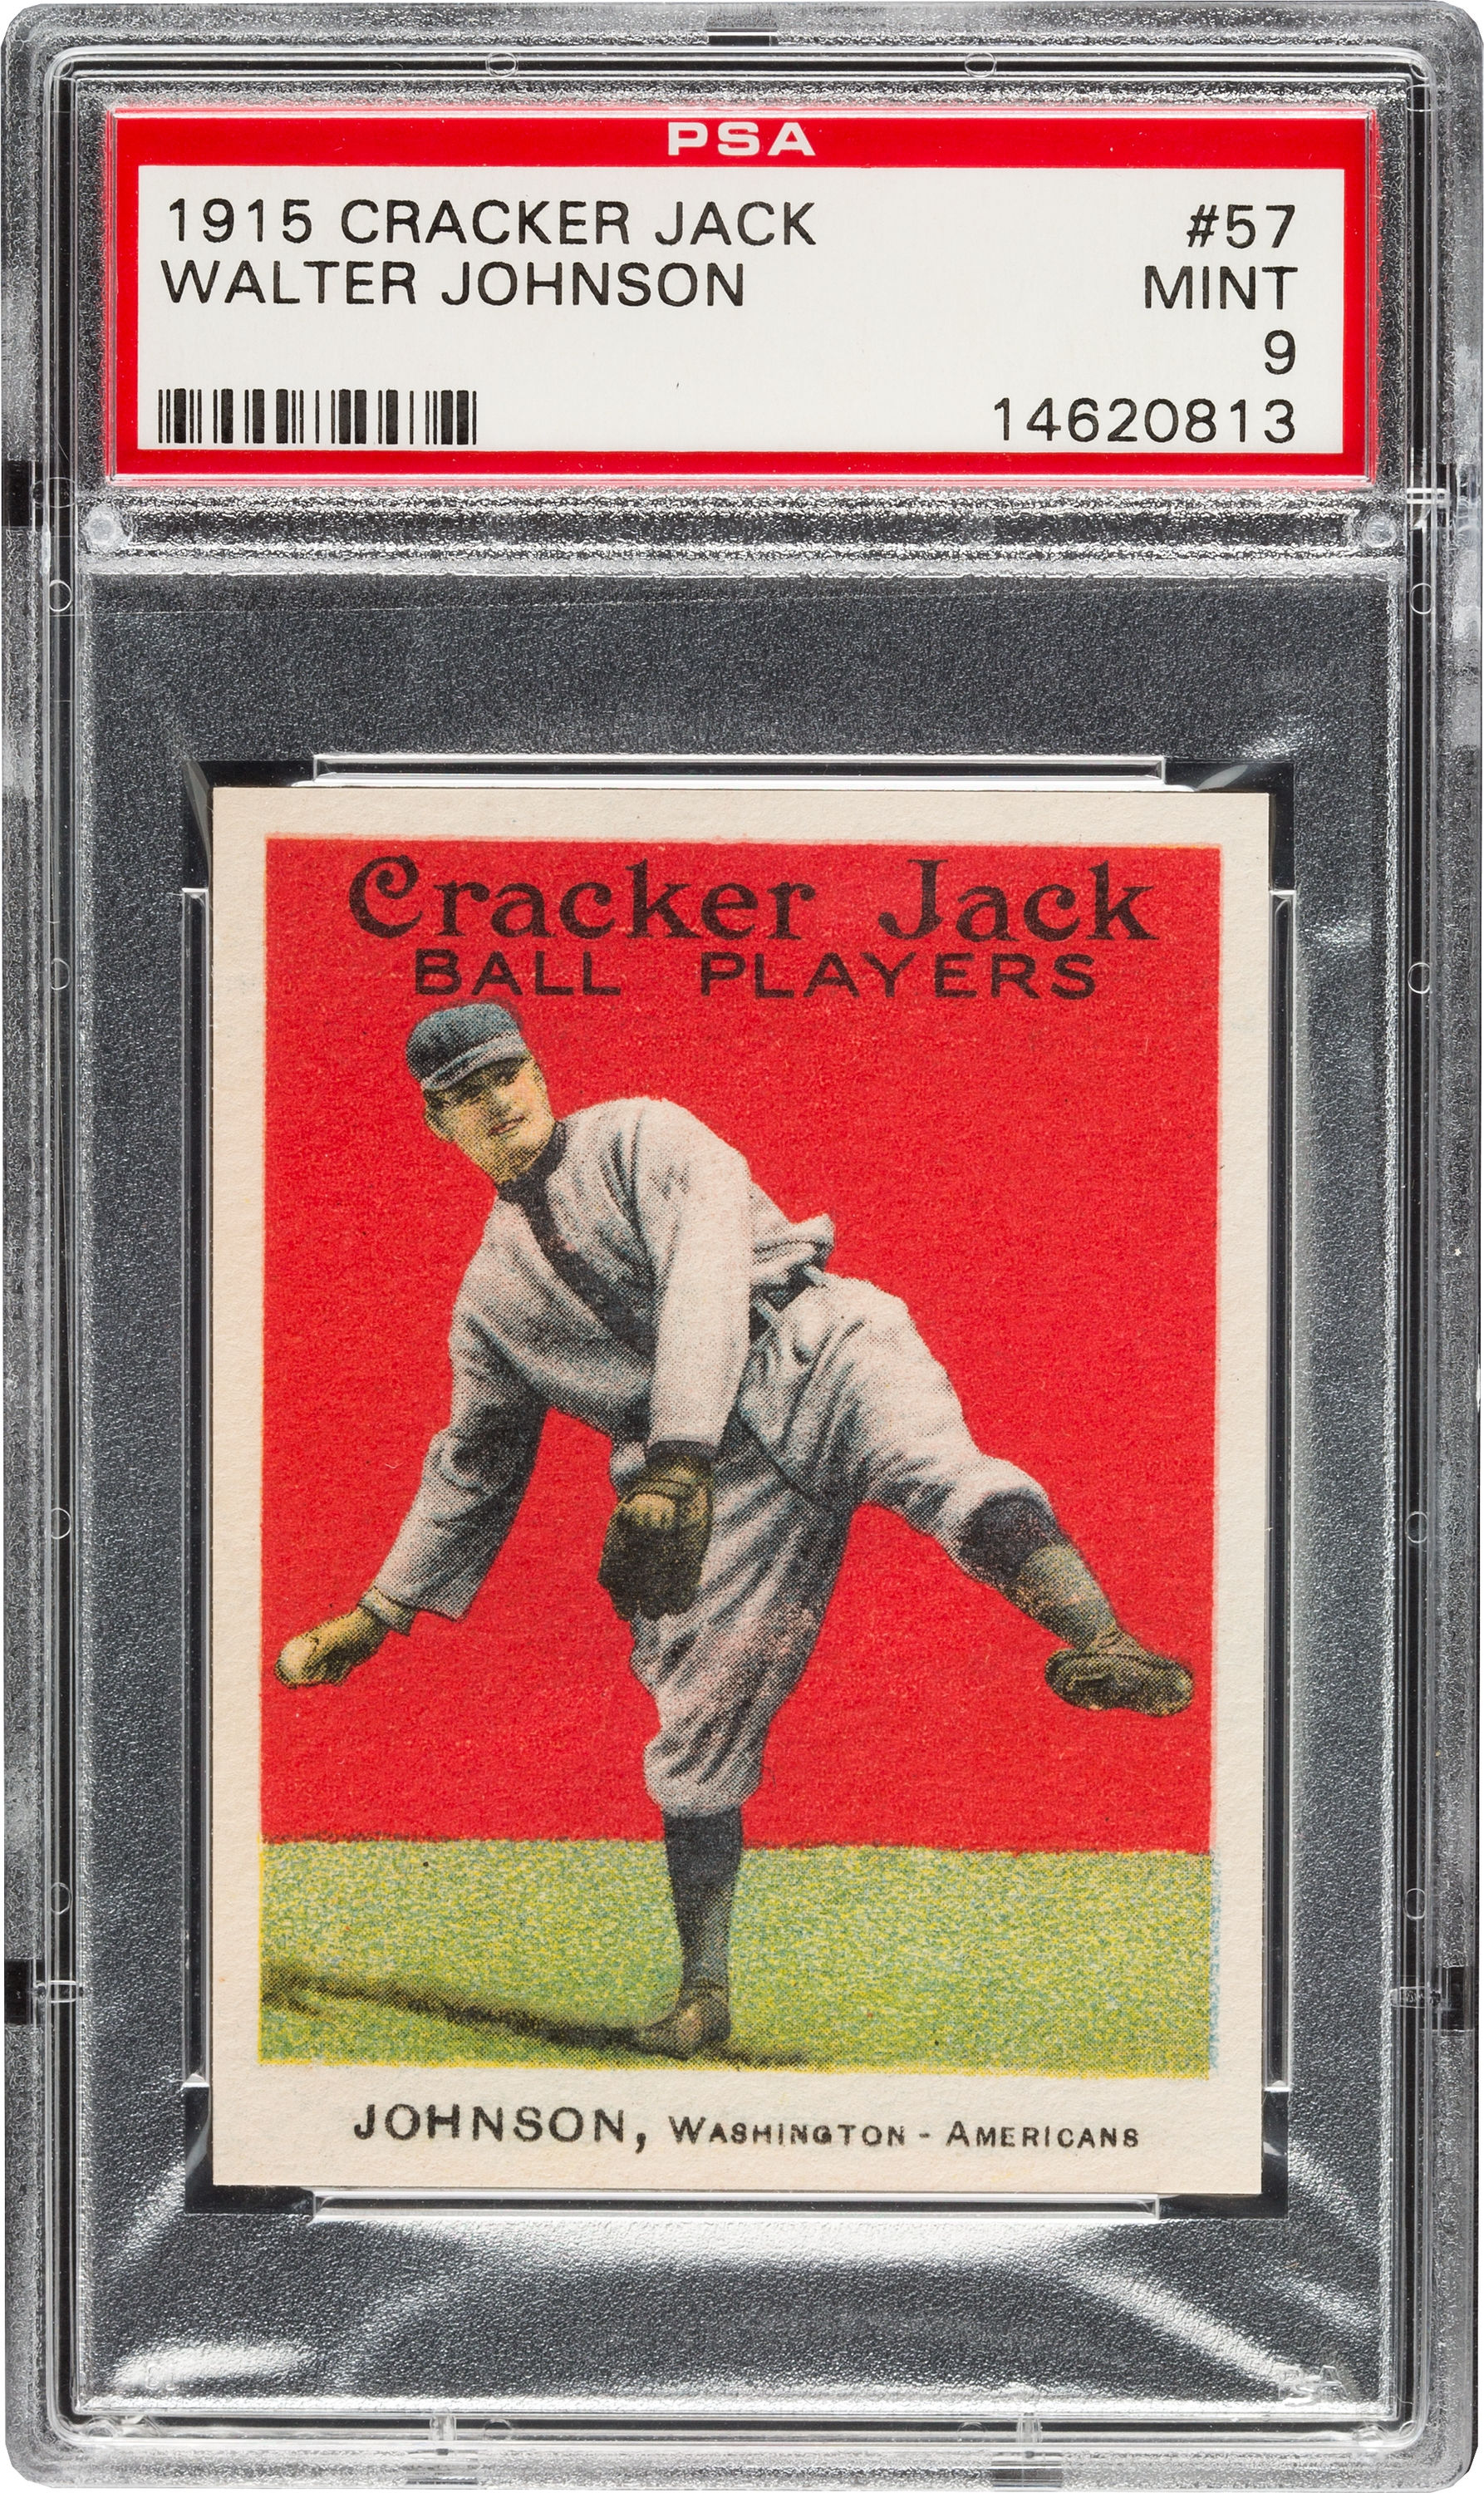 1915 CRACKER JACK WALTER JOHNSON #57